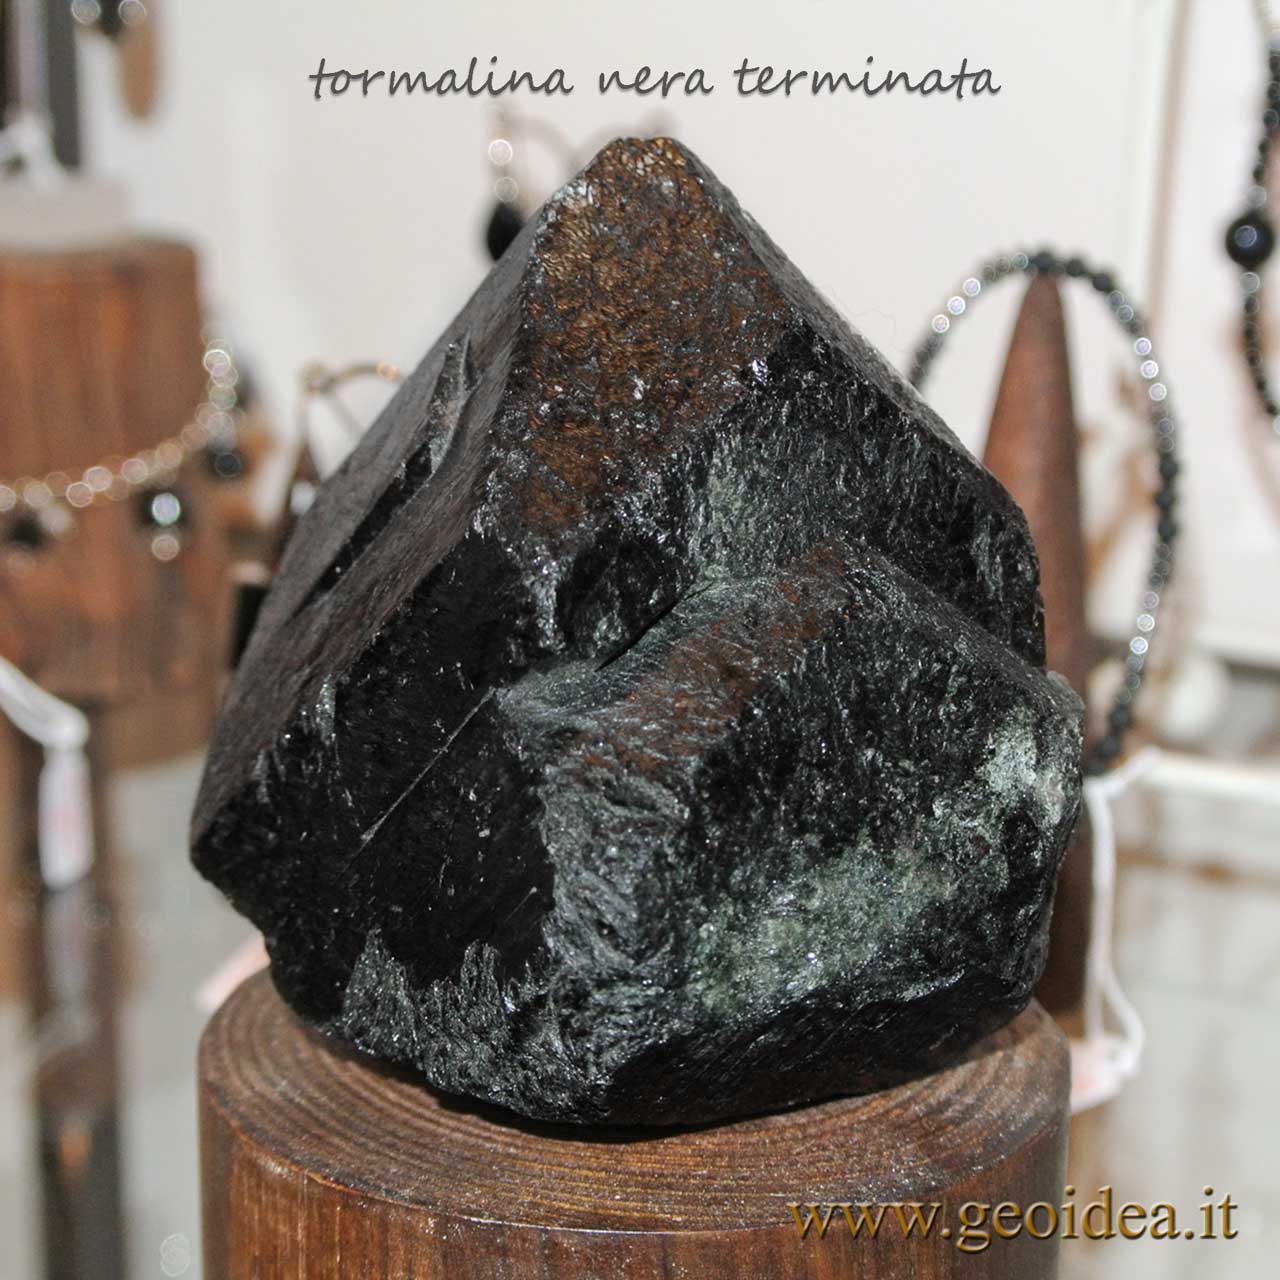 cristallo di tormalina nera – Geoidea